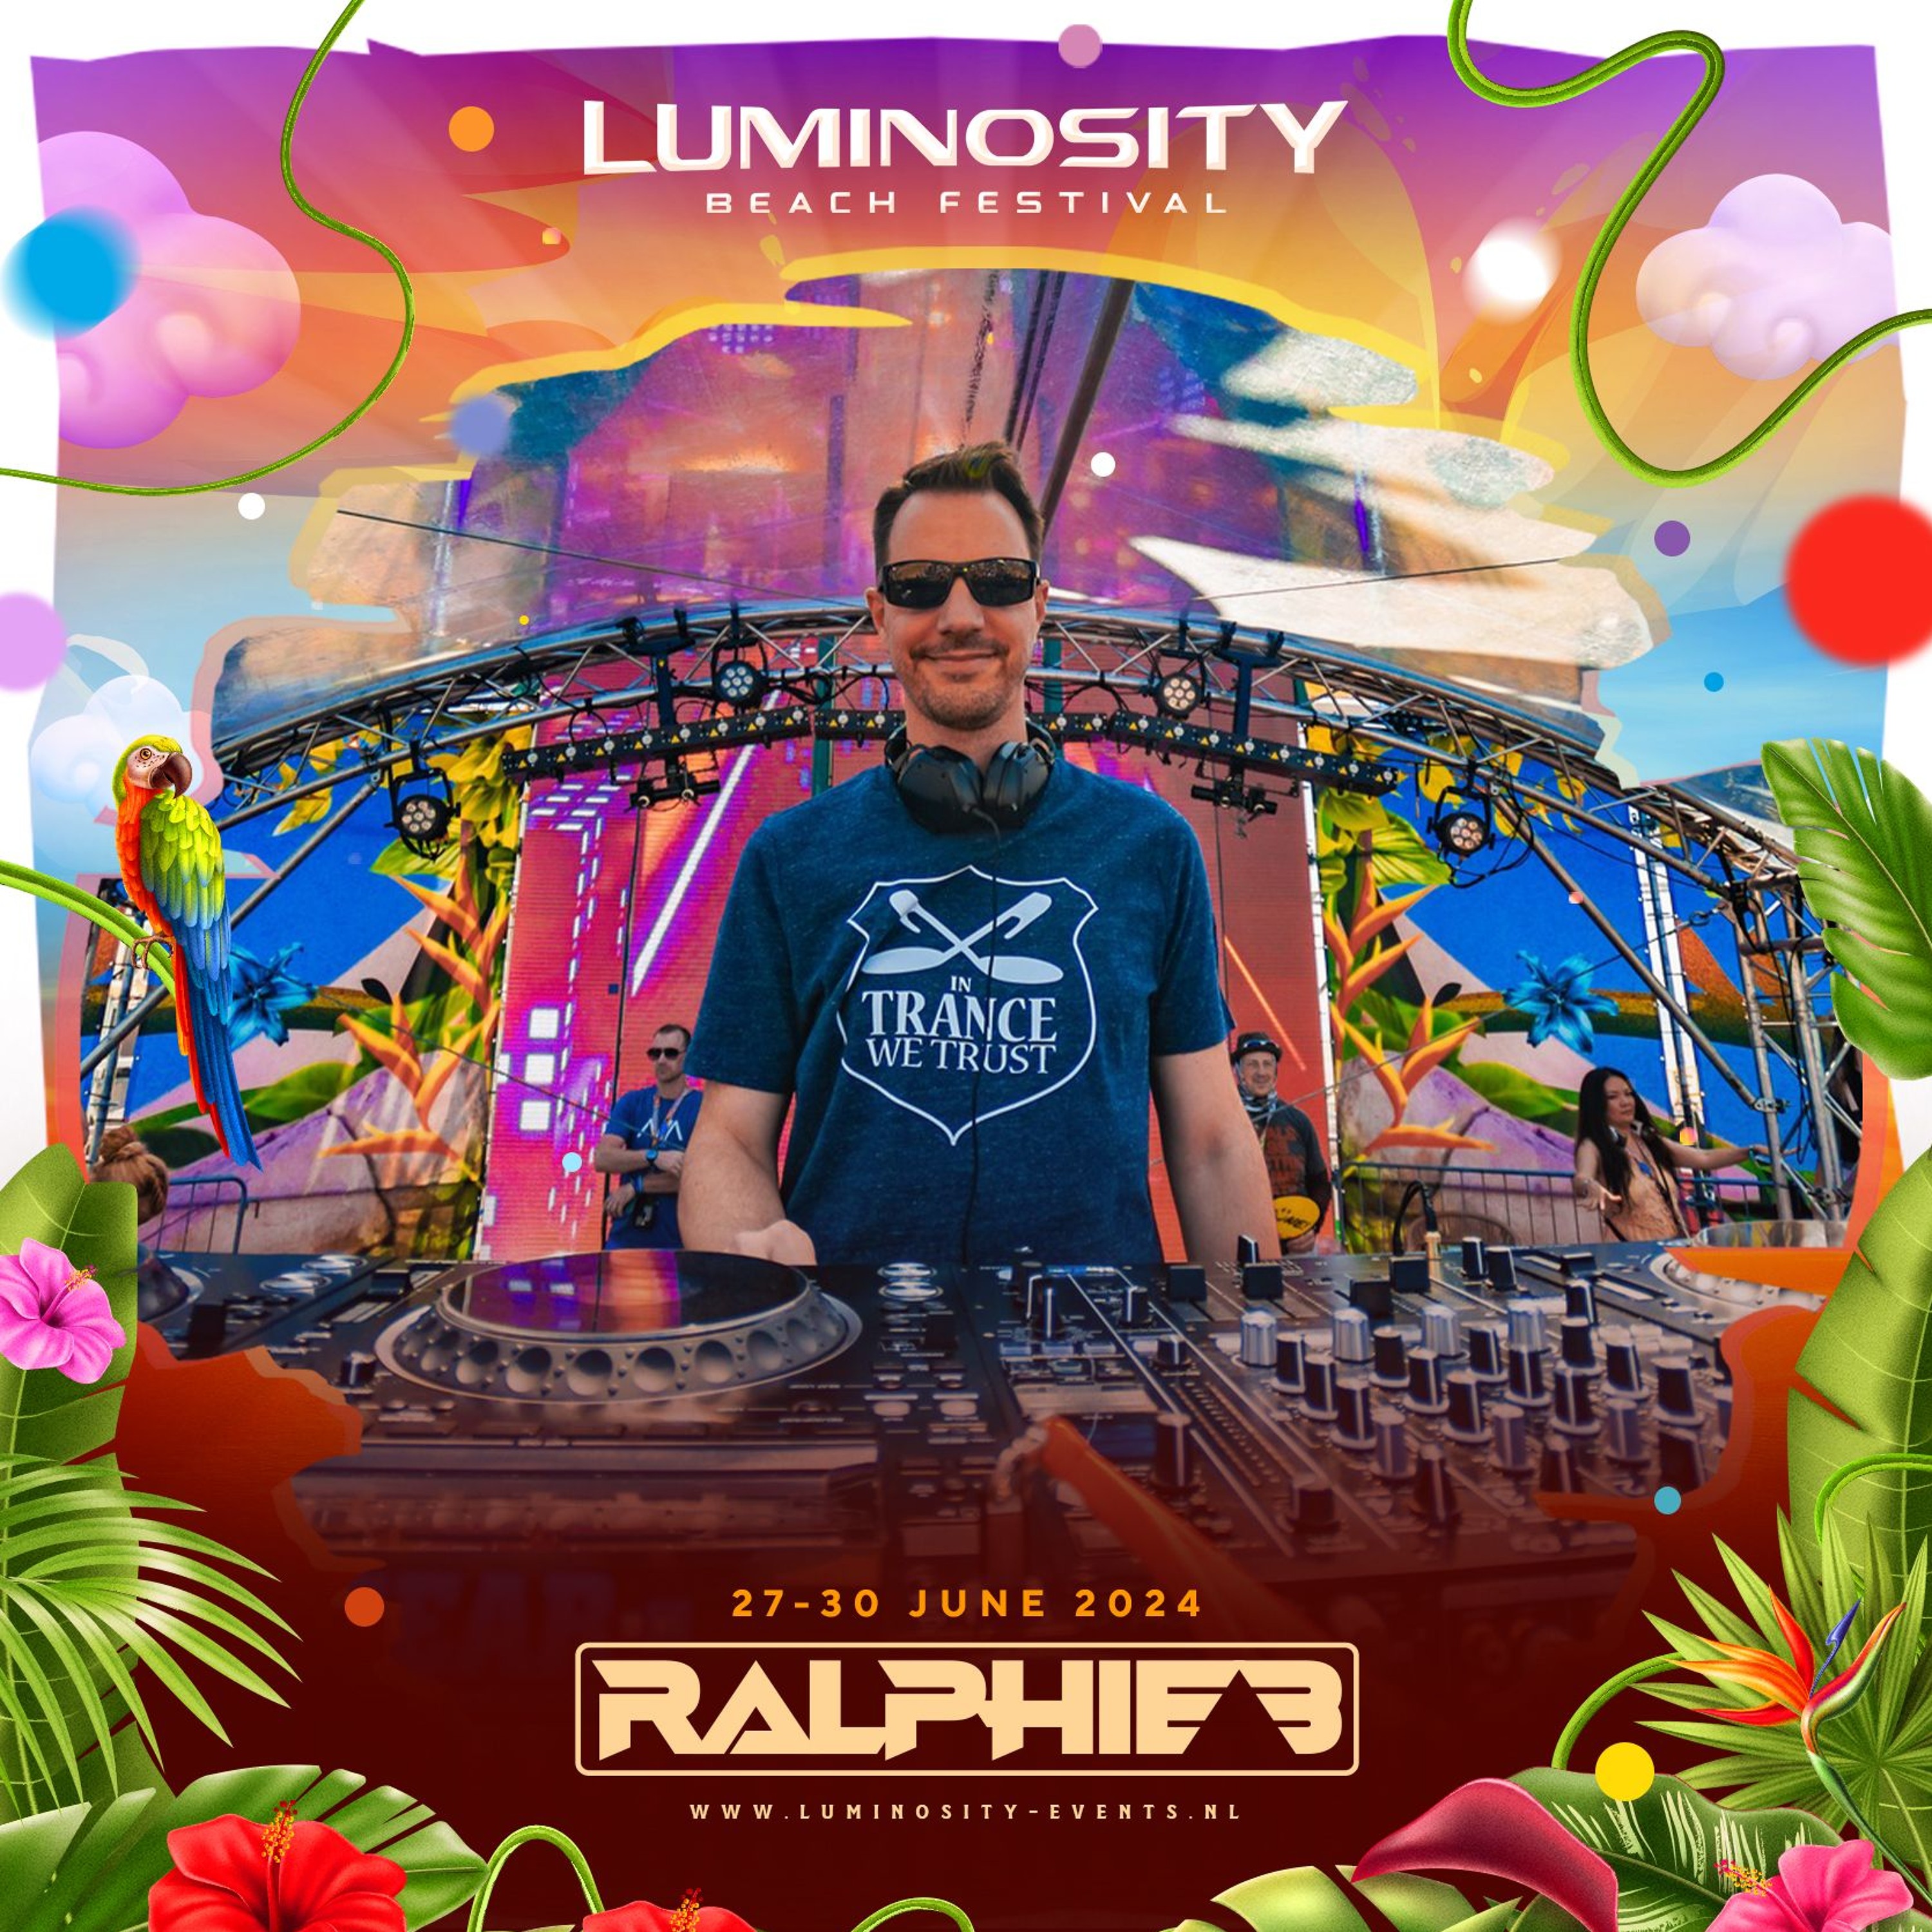 Ralphie B @ Luminosity Beach Festival 2024